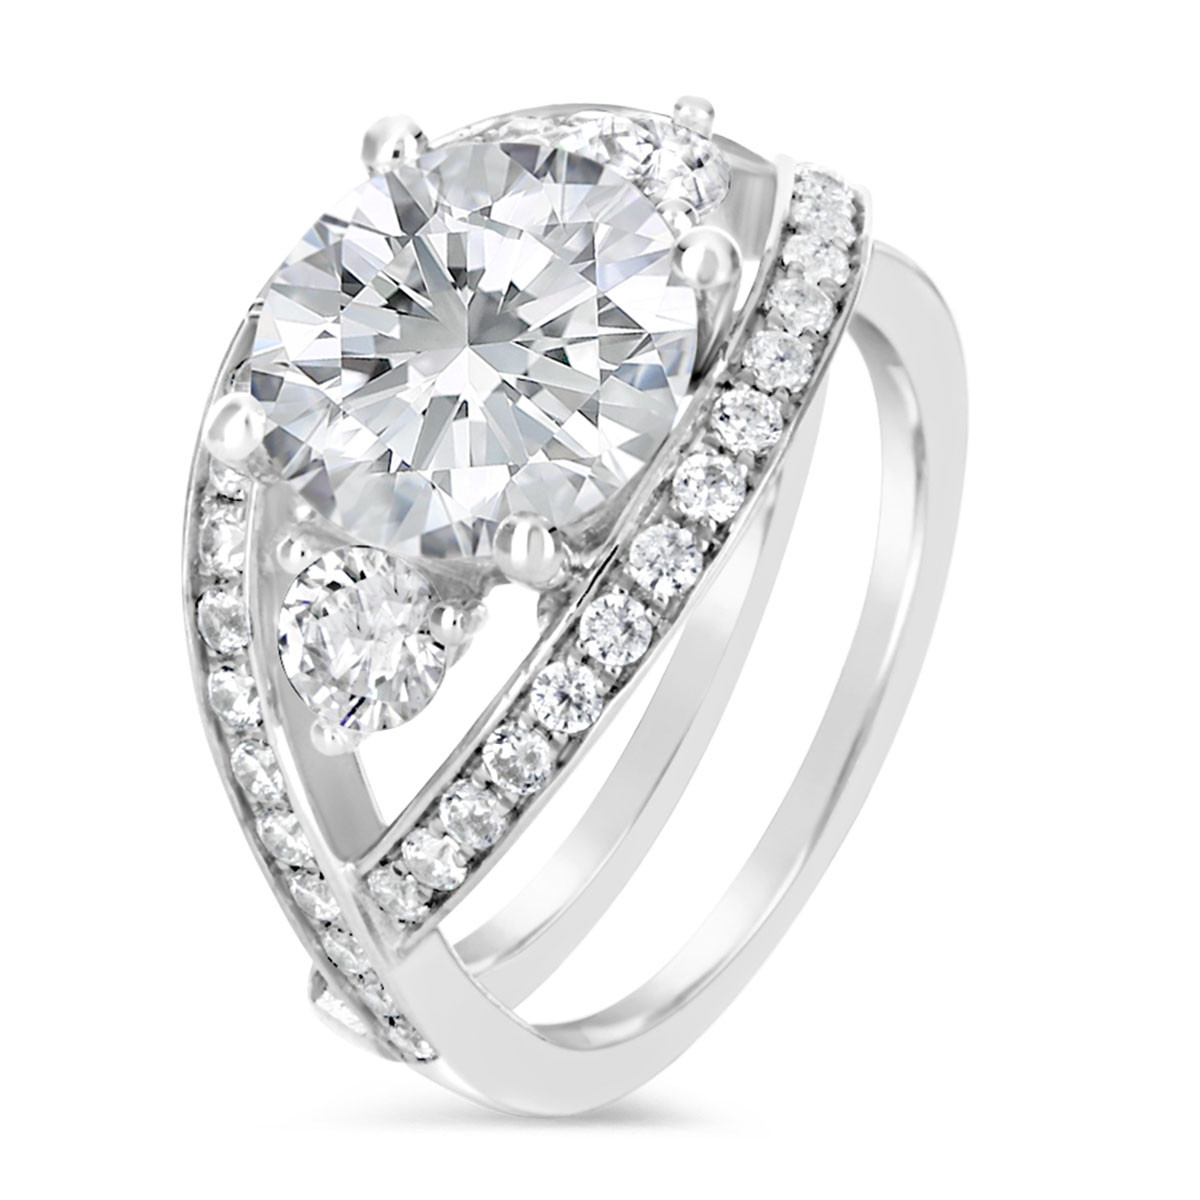 Unique Diamond Engagement Rings
 Unique Diamond Engagement Ring The Diamond Guys